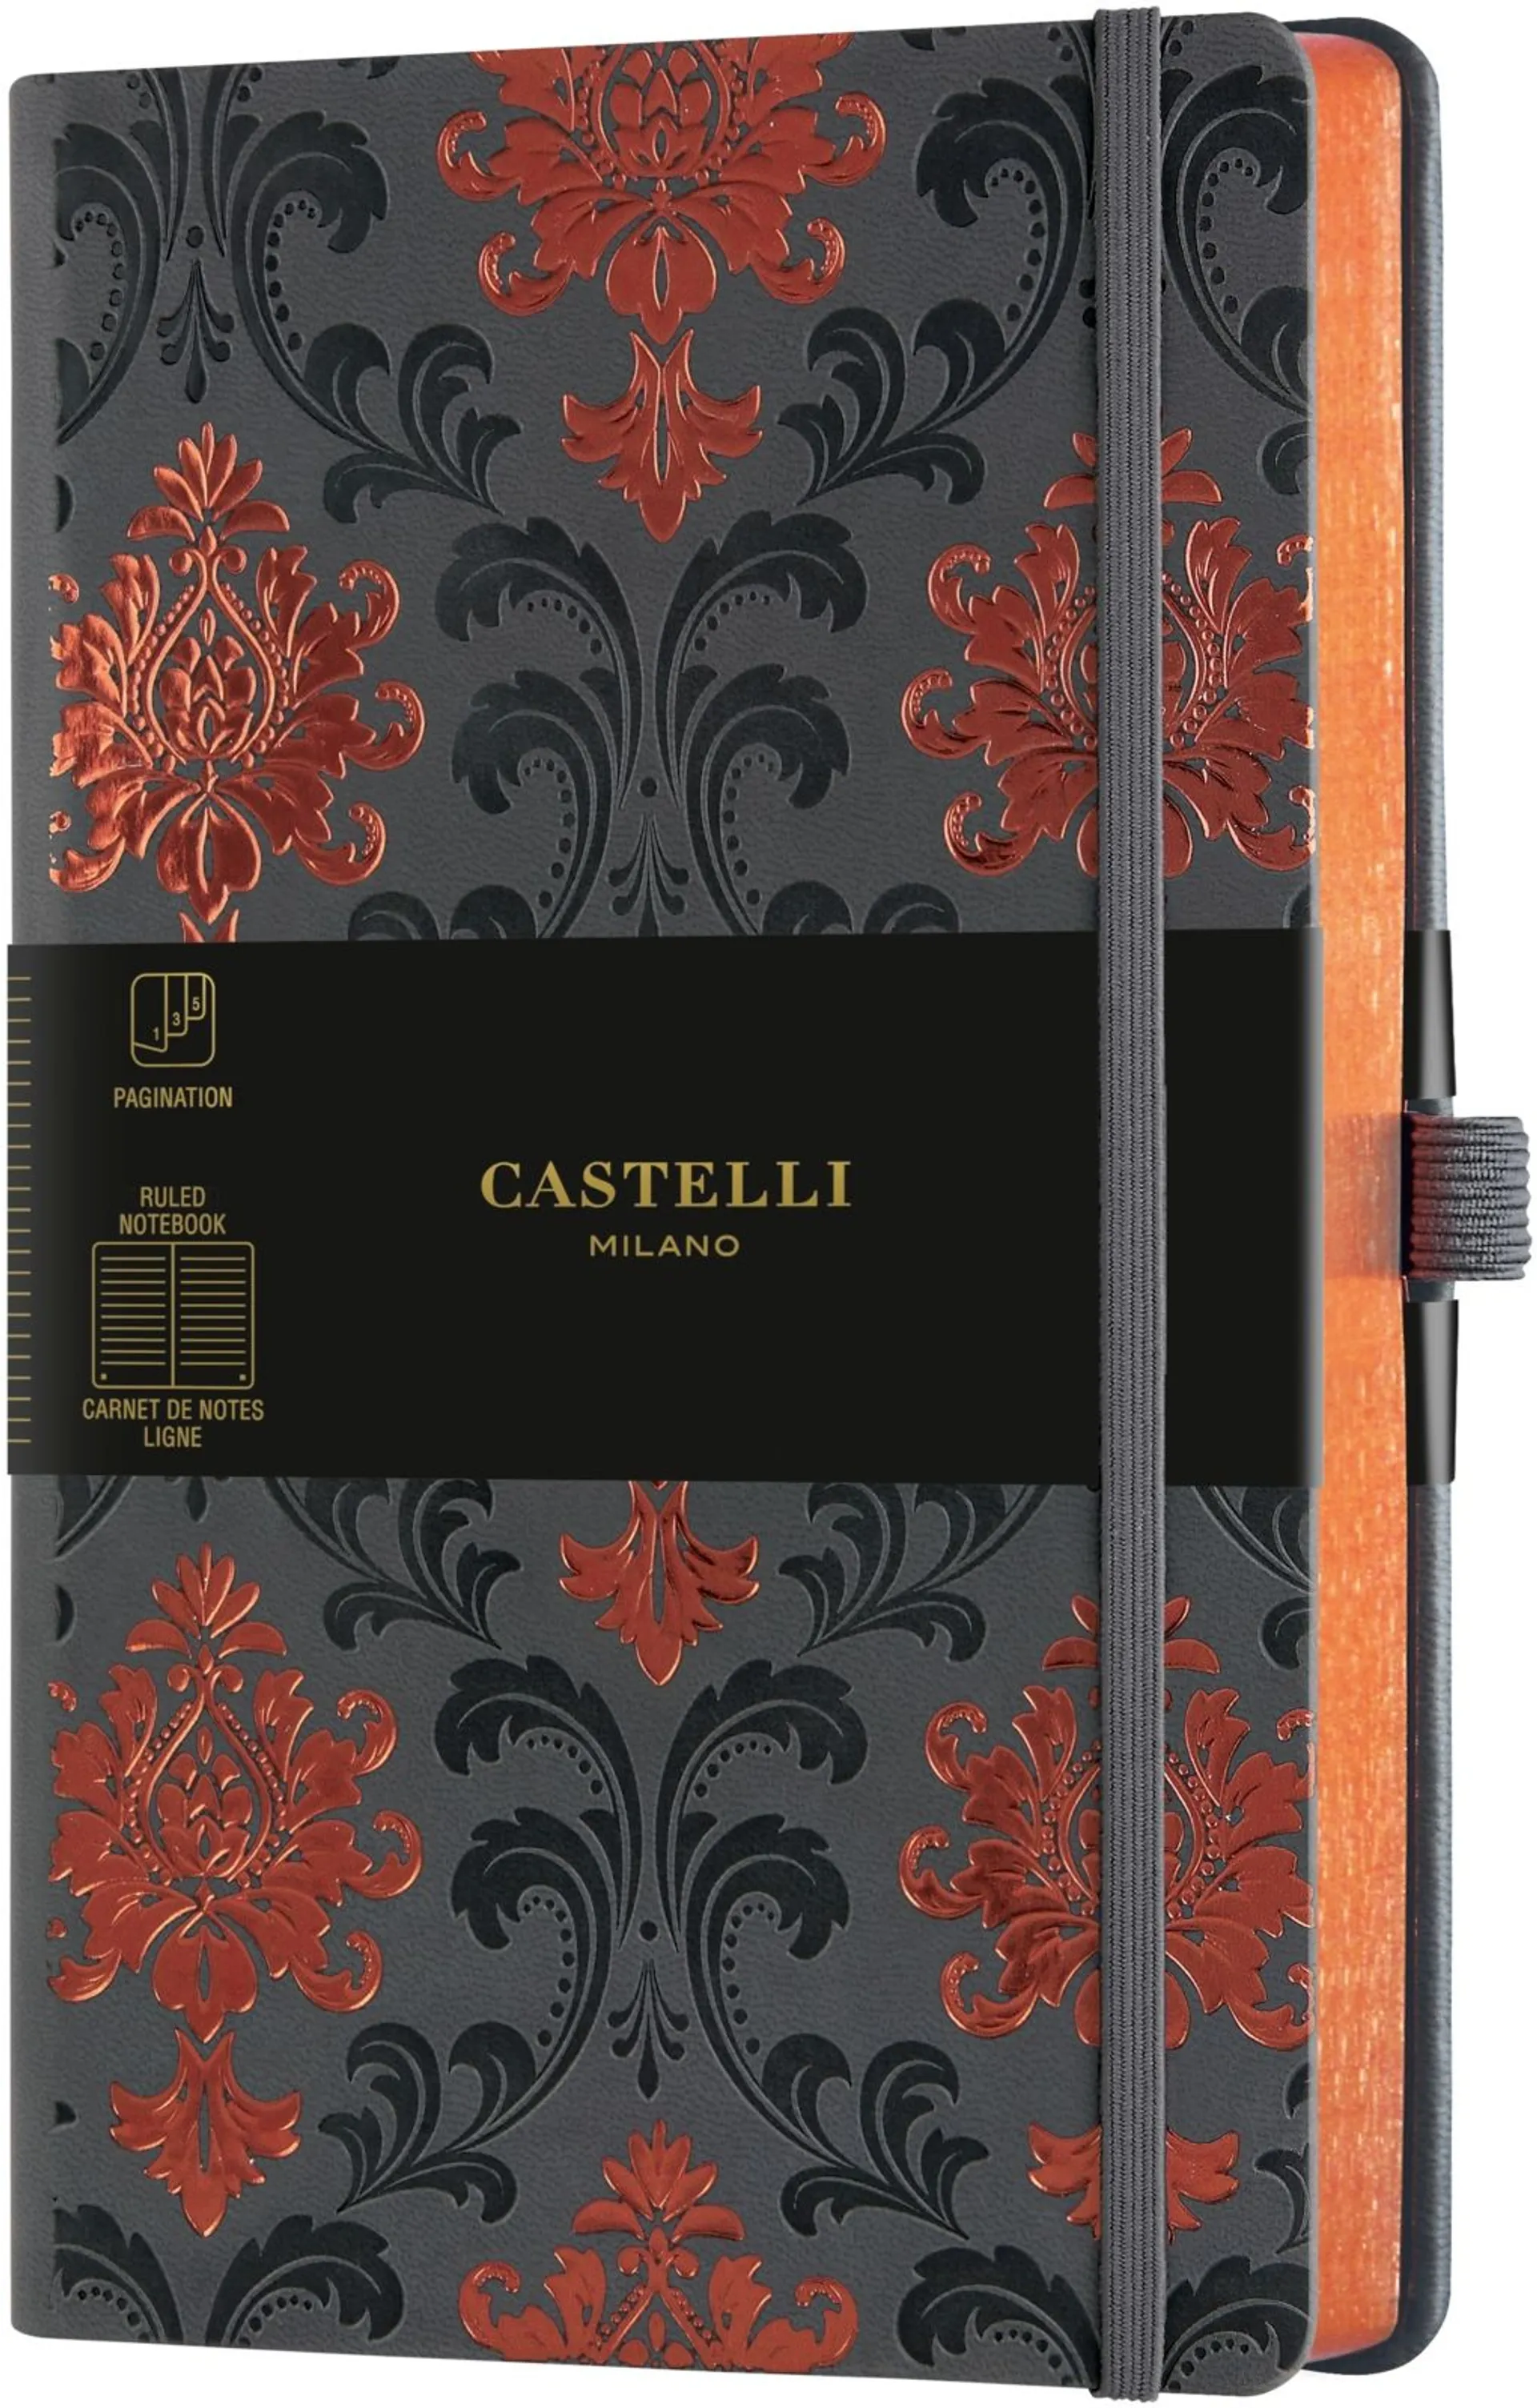 Castelli muistikirja Baroque 13x21